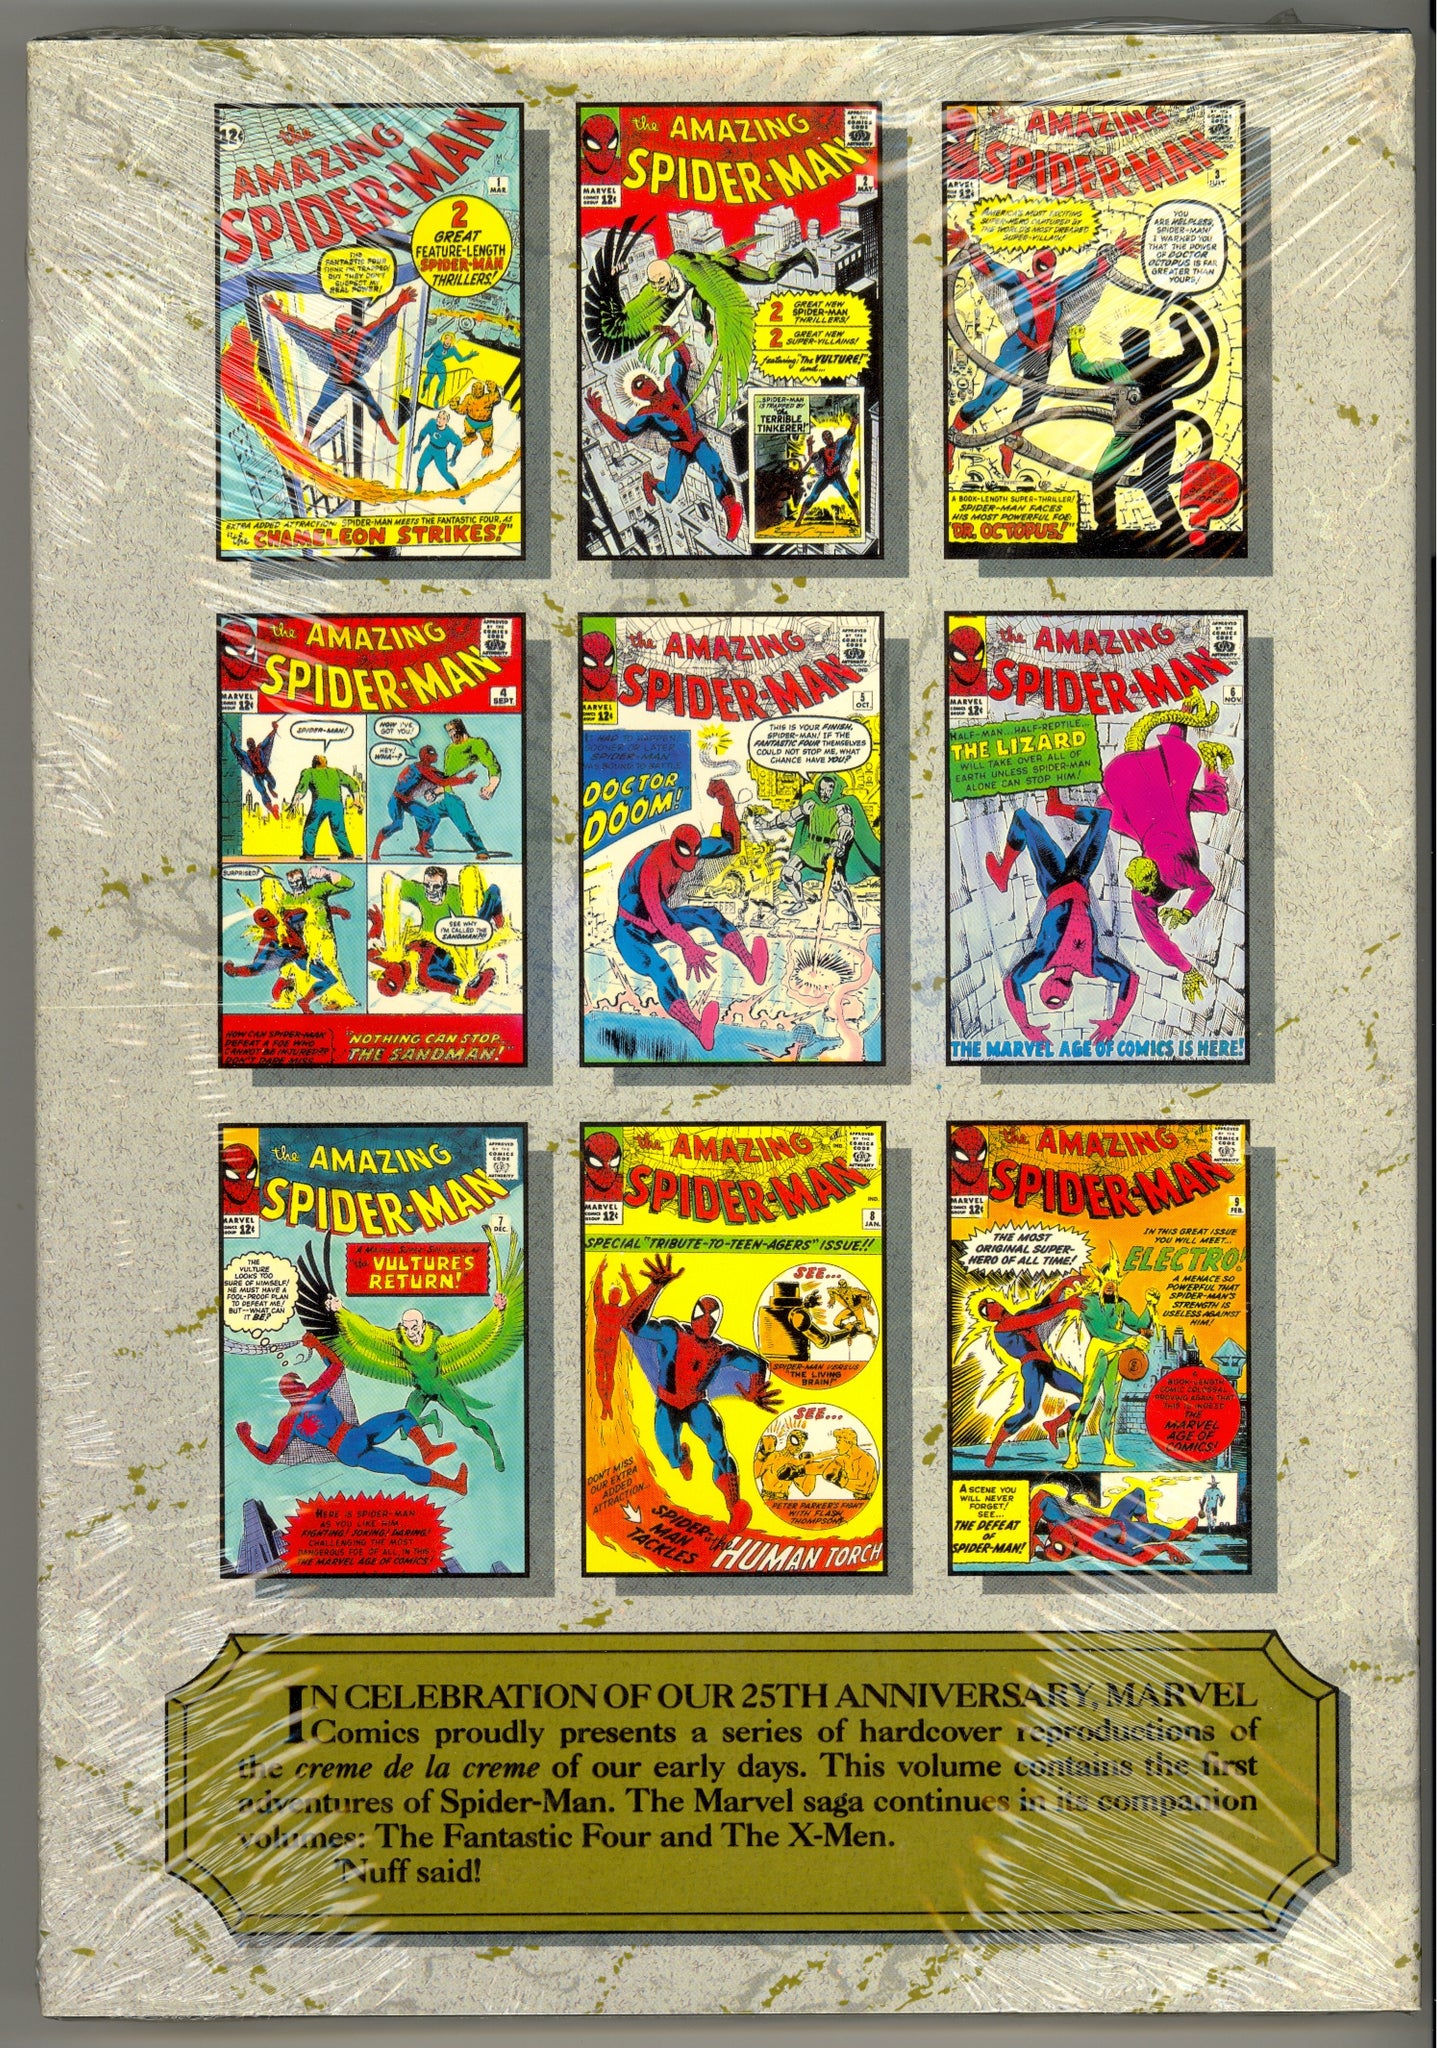 Marvel Masterworks volume 1 Amazing Fantasy 15, Amazing Spider-Man issues 1-10 - 1st printing